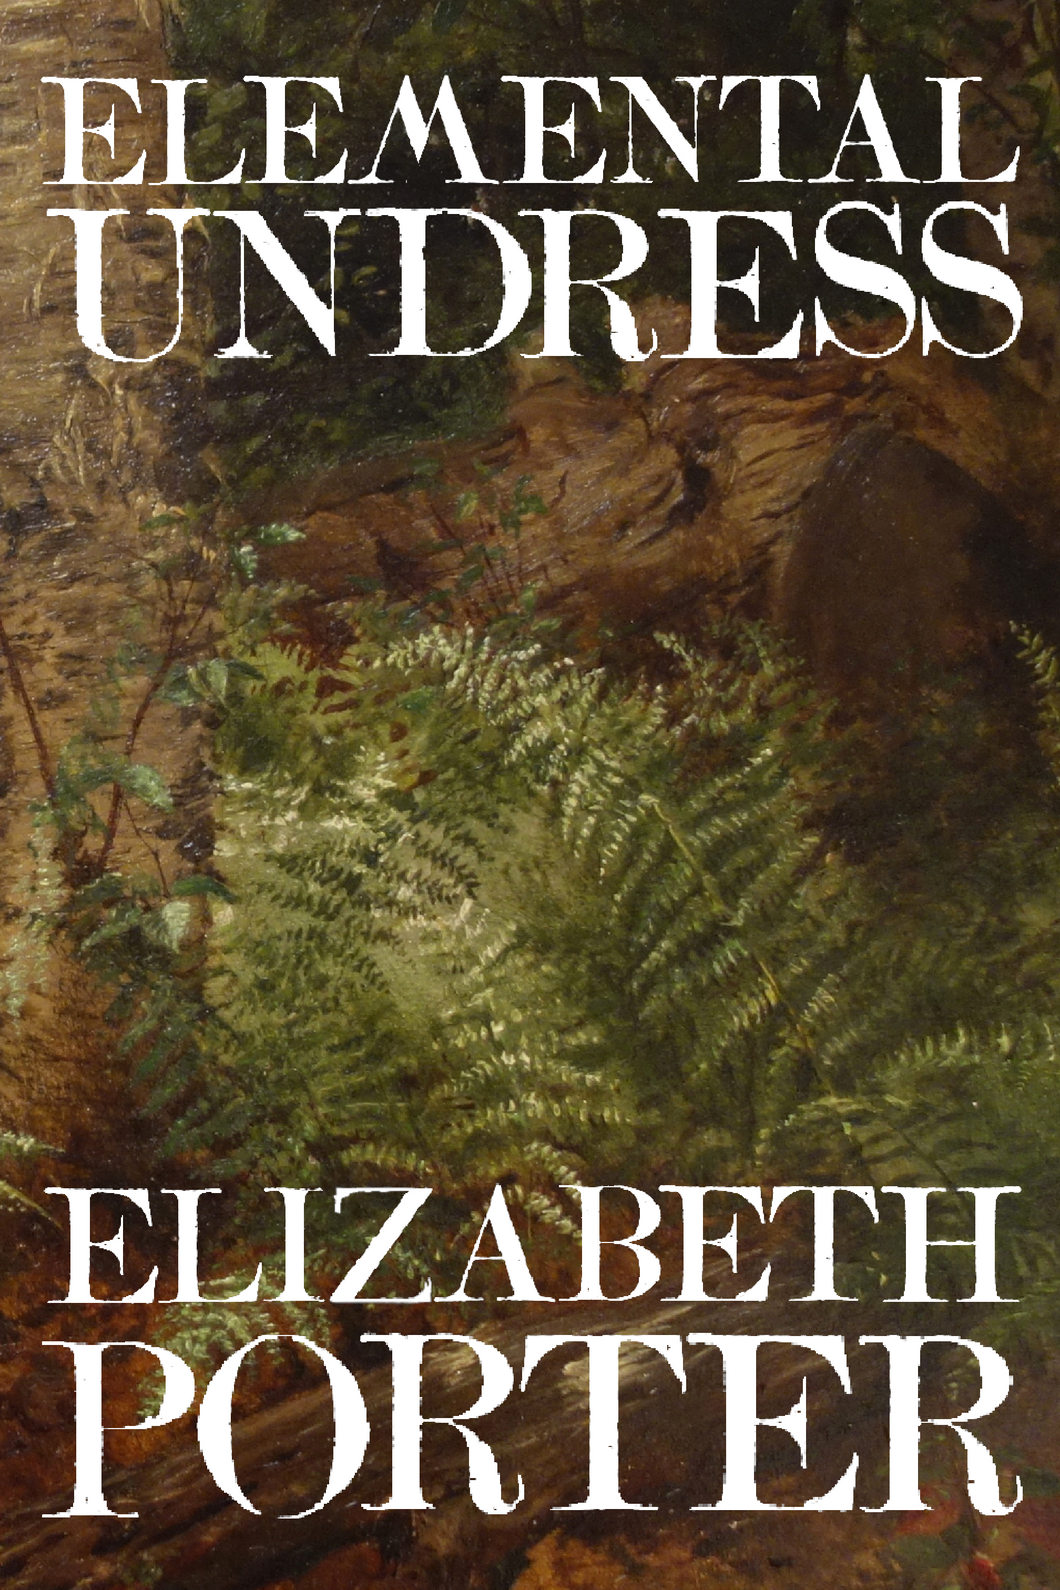 Elemental Undress, by Elizabeth Porter-Print Books-Bottlecap Press